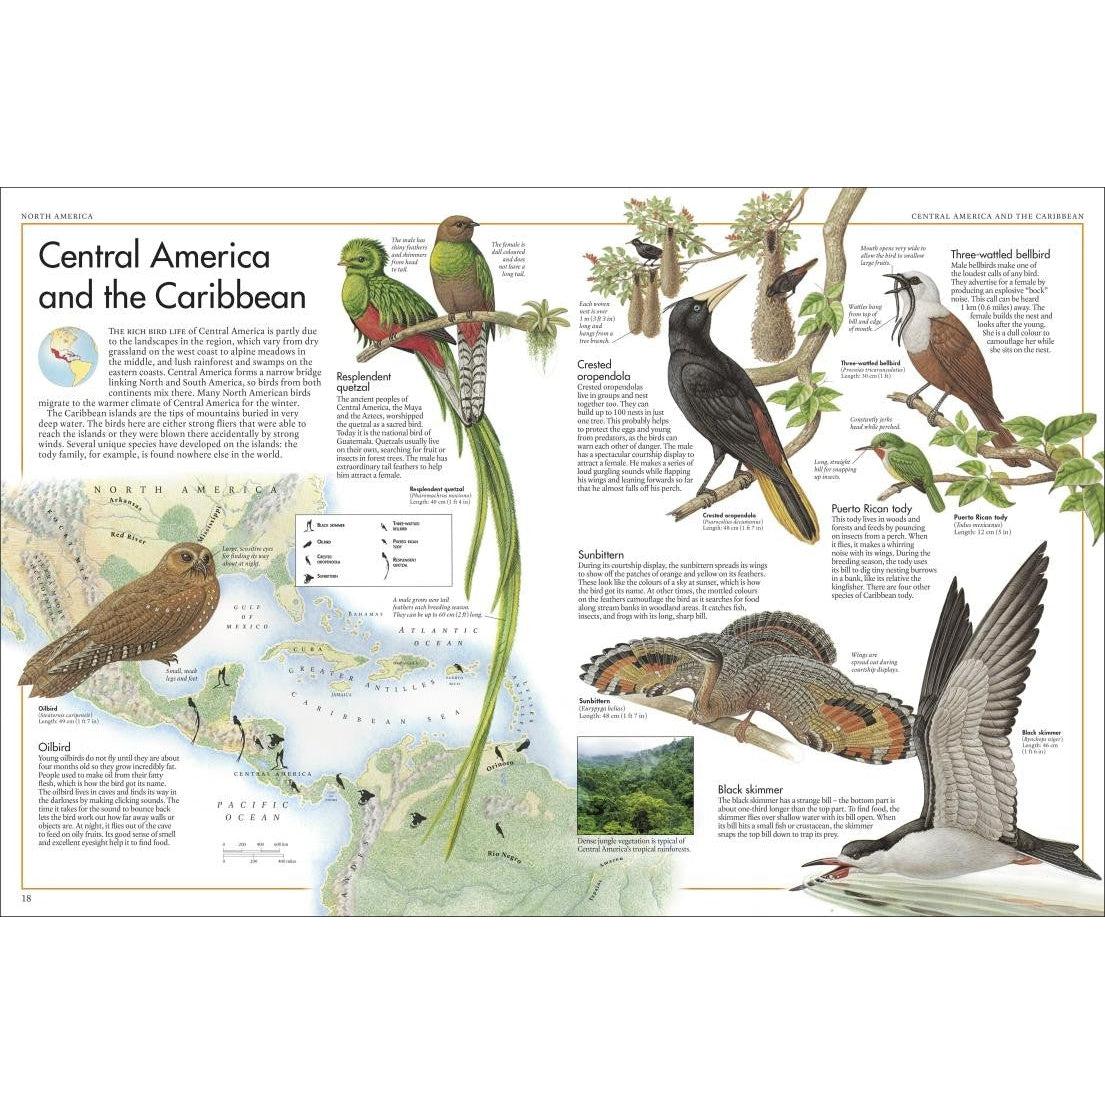 The Bird Atlas: A Pictorial Guide to the World's Birdlife